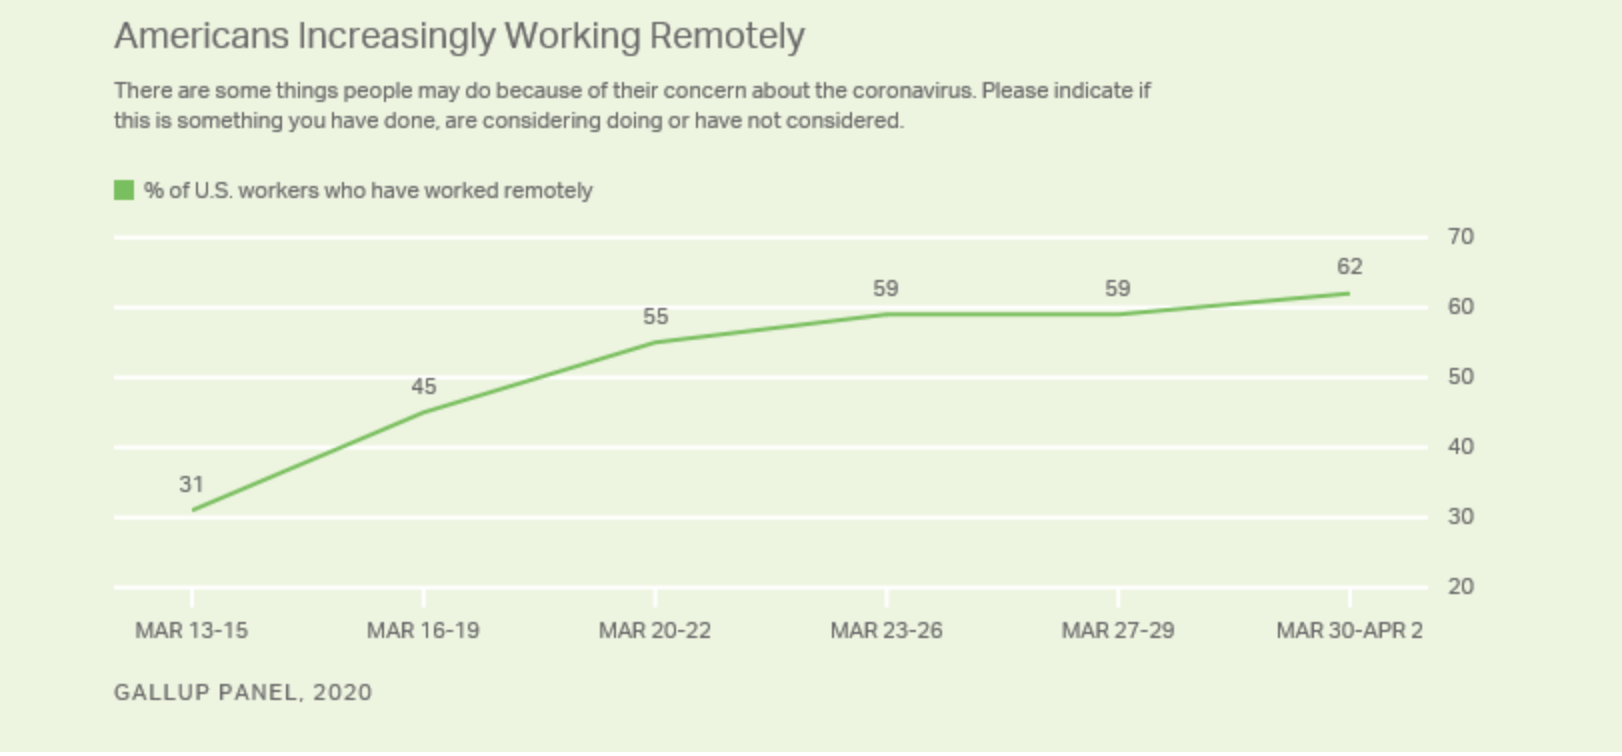 Remote Work in the U.S. Under COVID-19